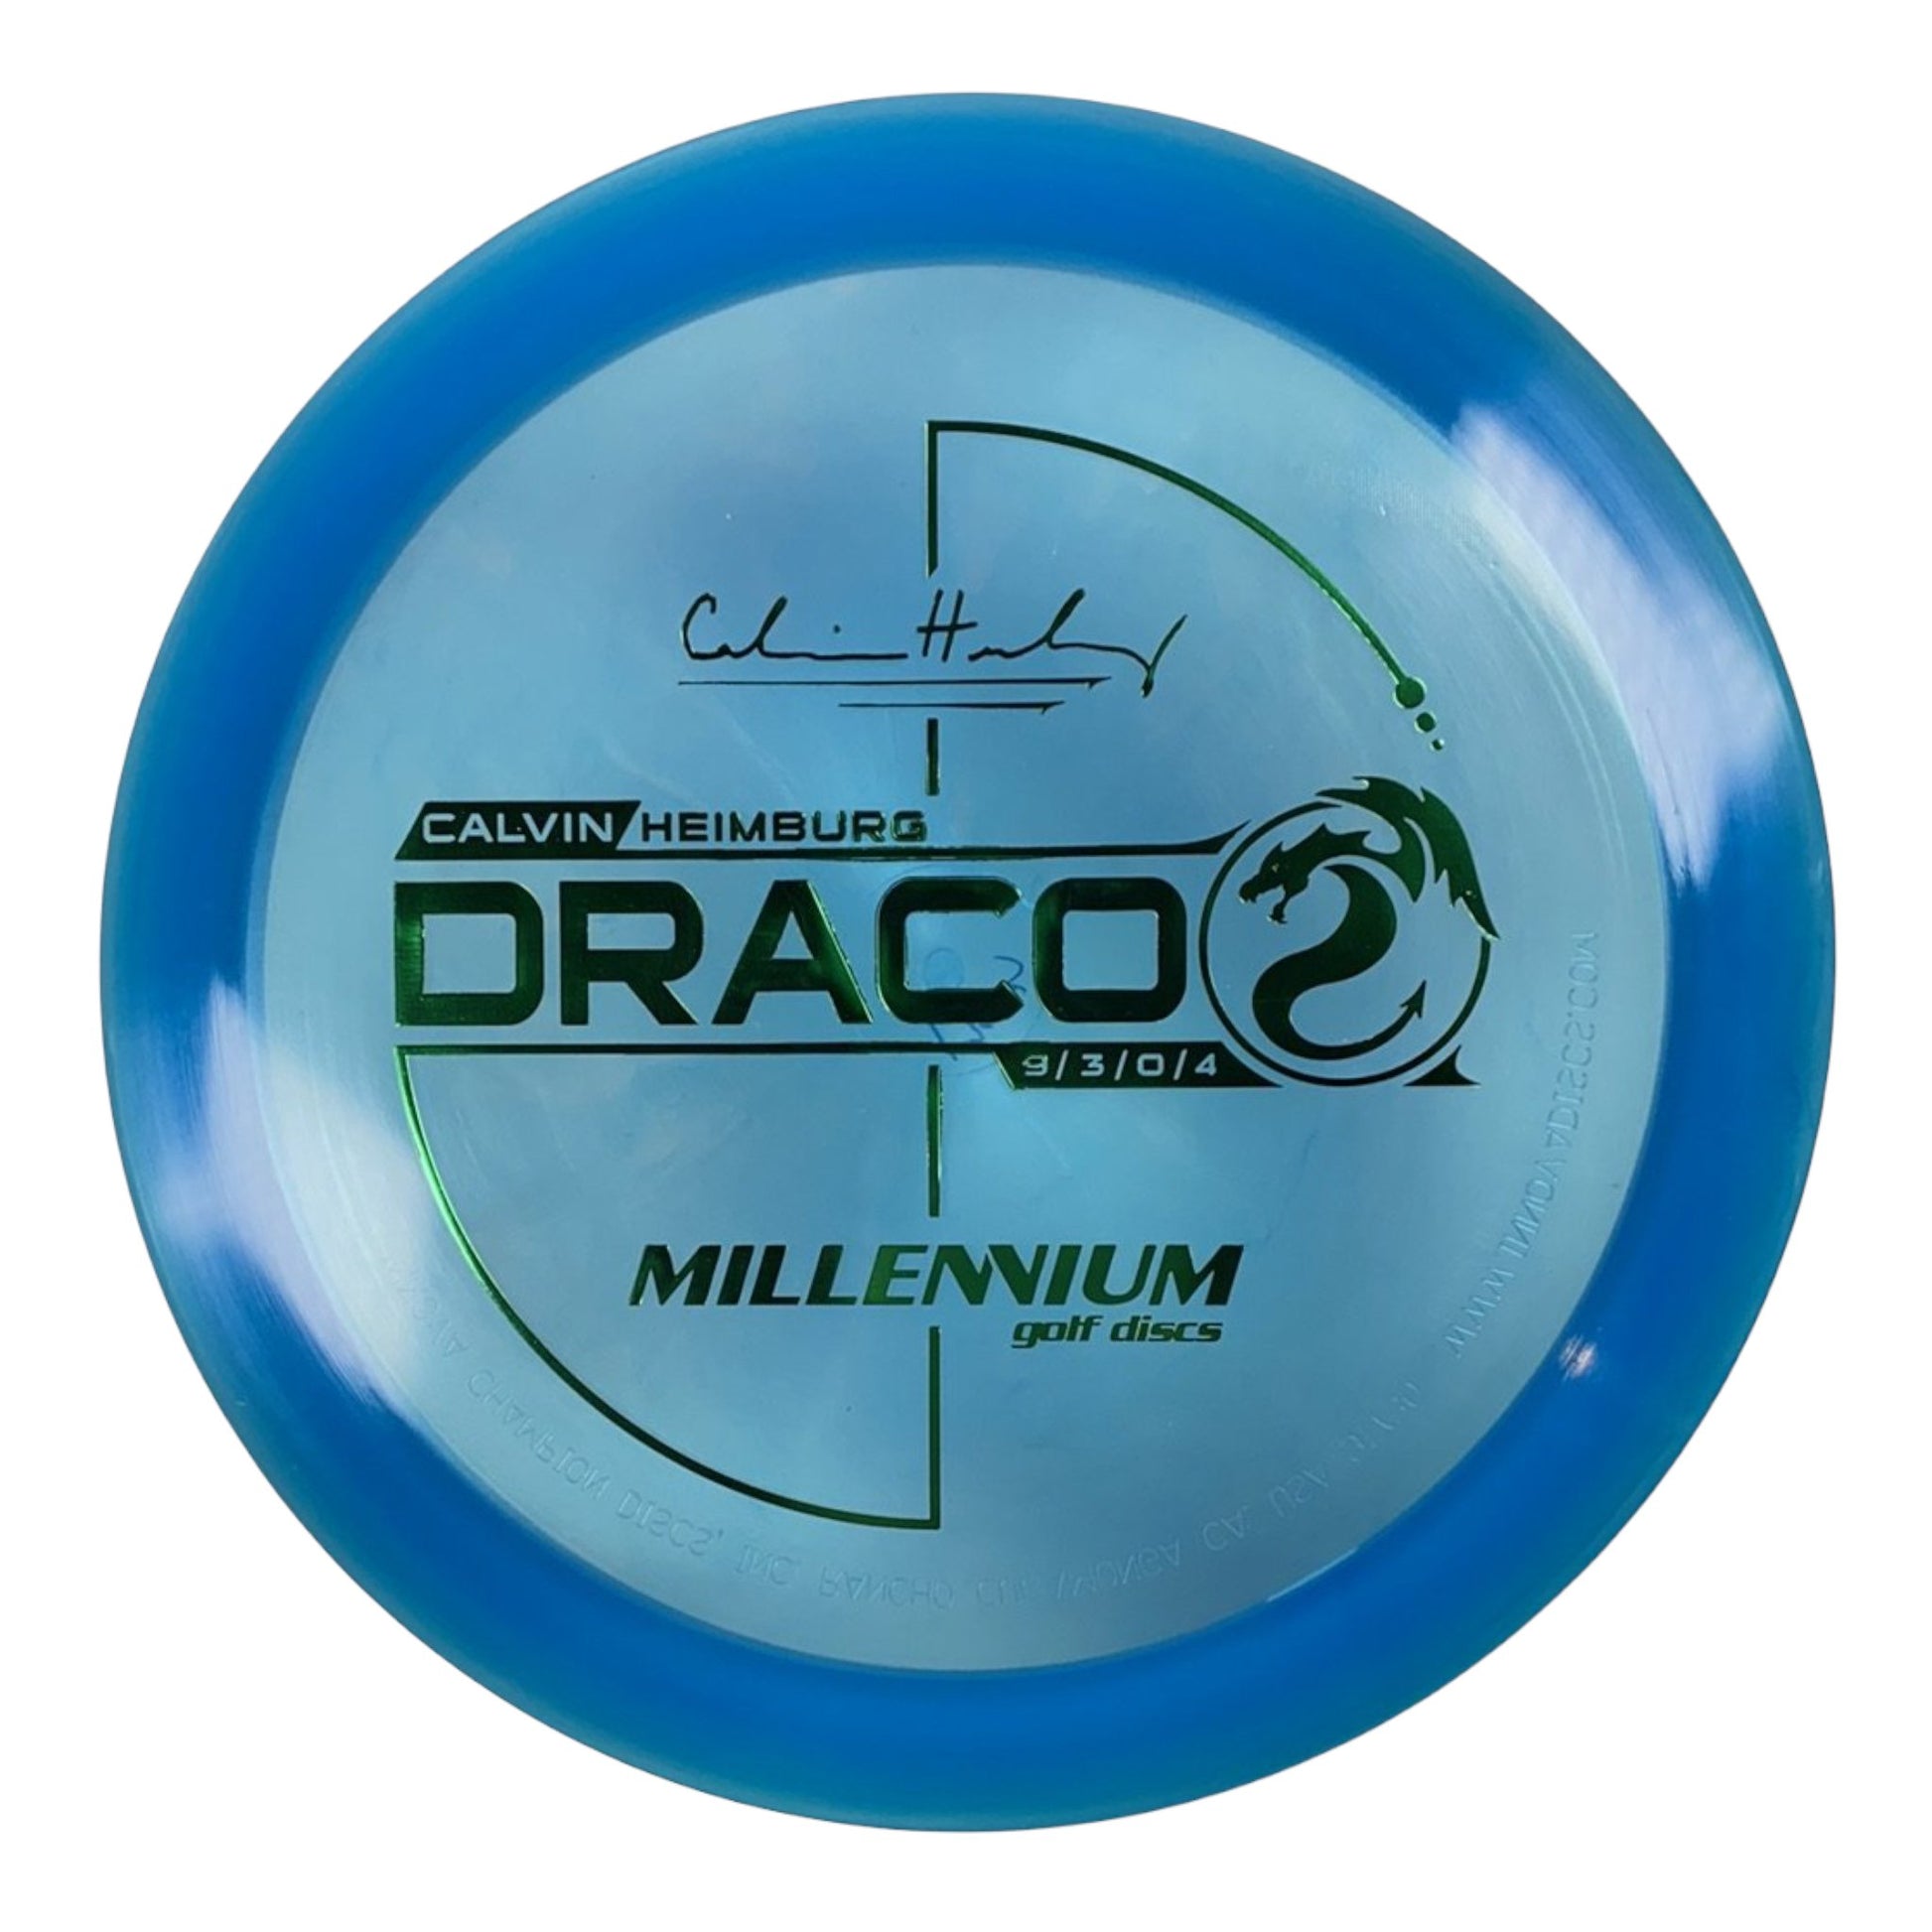 Millennium Golf Discs Draco | Quantum | Blue/Green 175g (Calvin Heimburg) Disc Golf